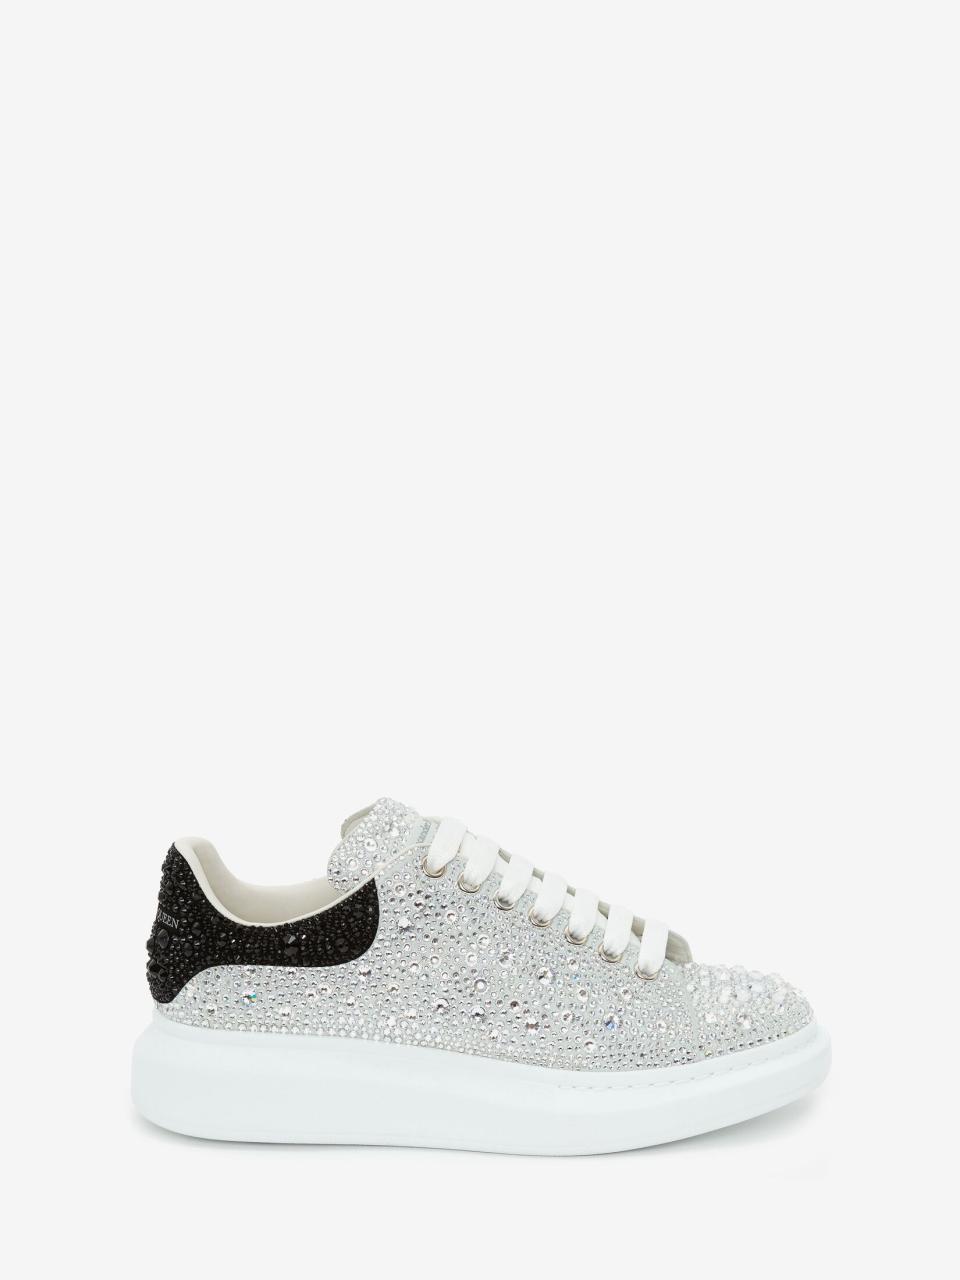 Alexander McQueen's Men's Crystal-embellished Oversized Sneaker in White/black. Price tag: 1 290 €